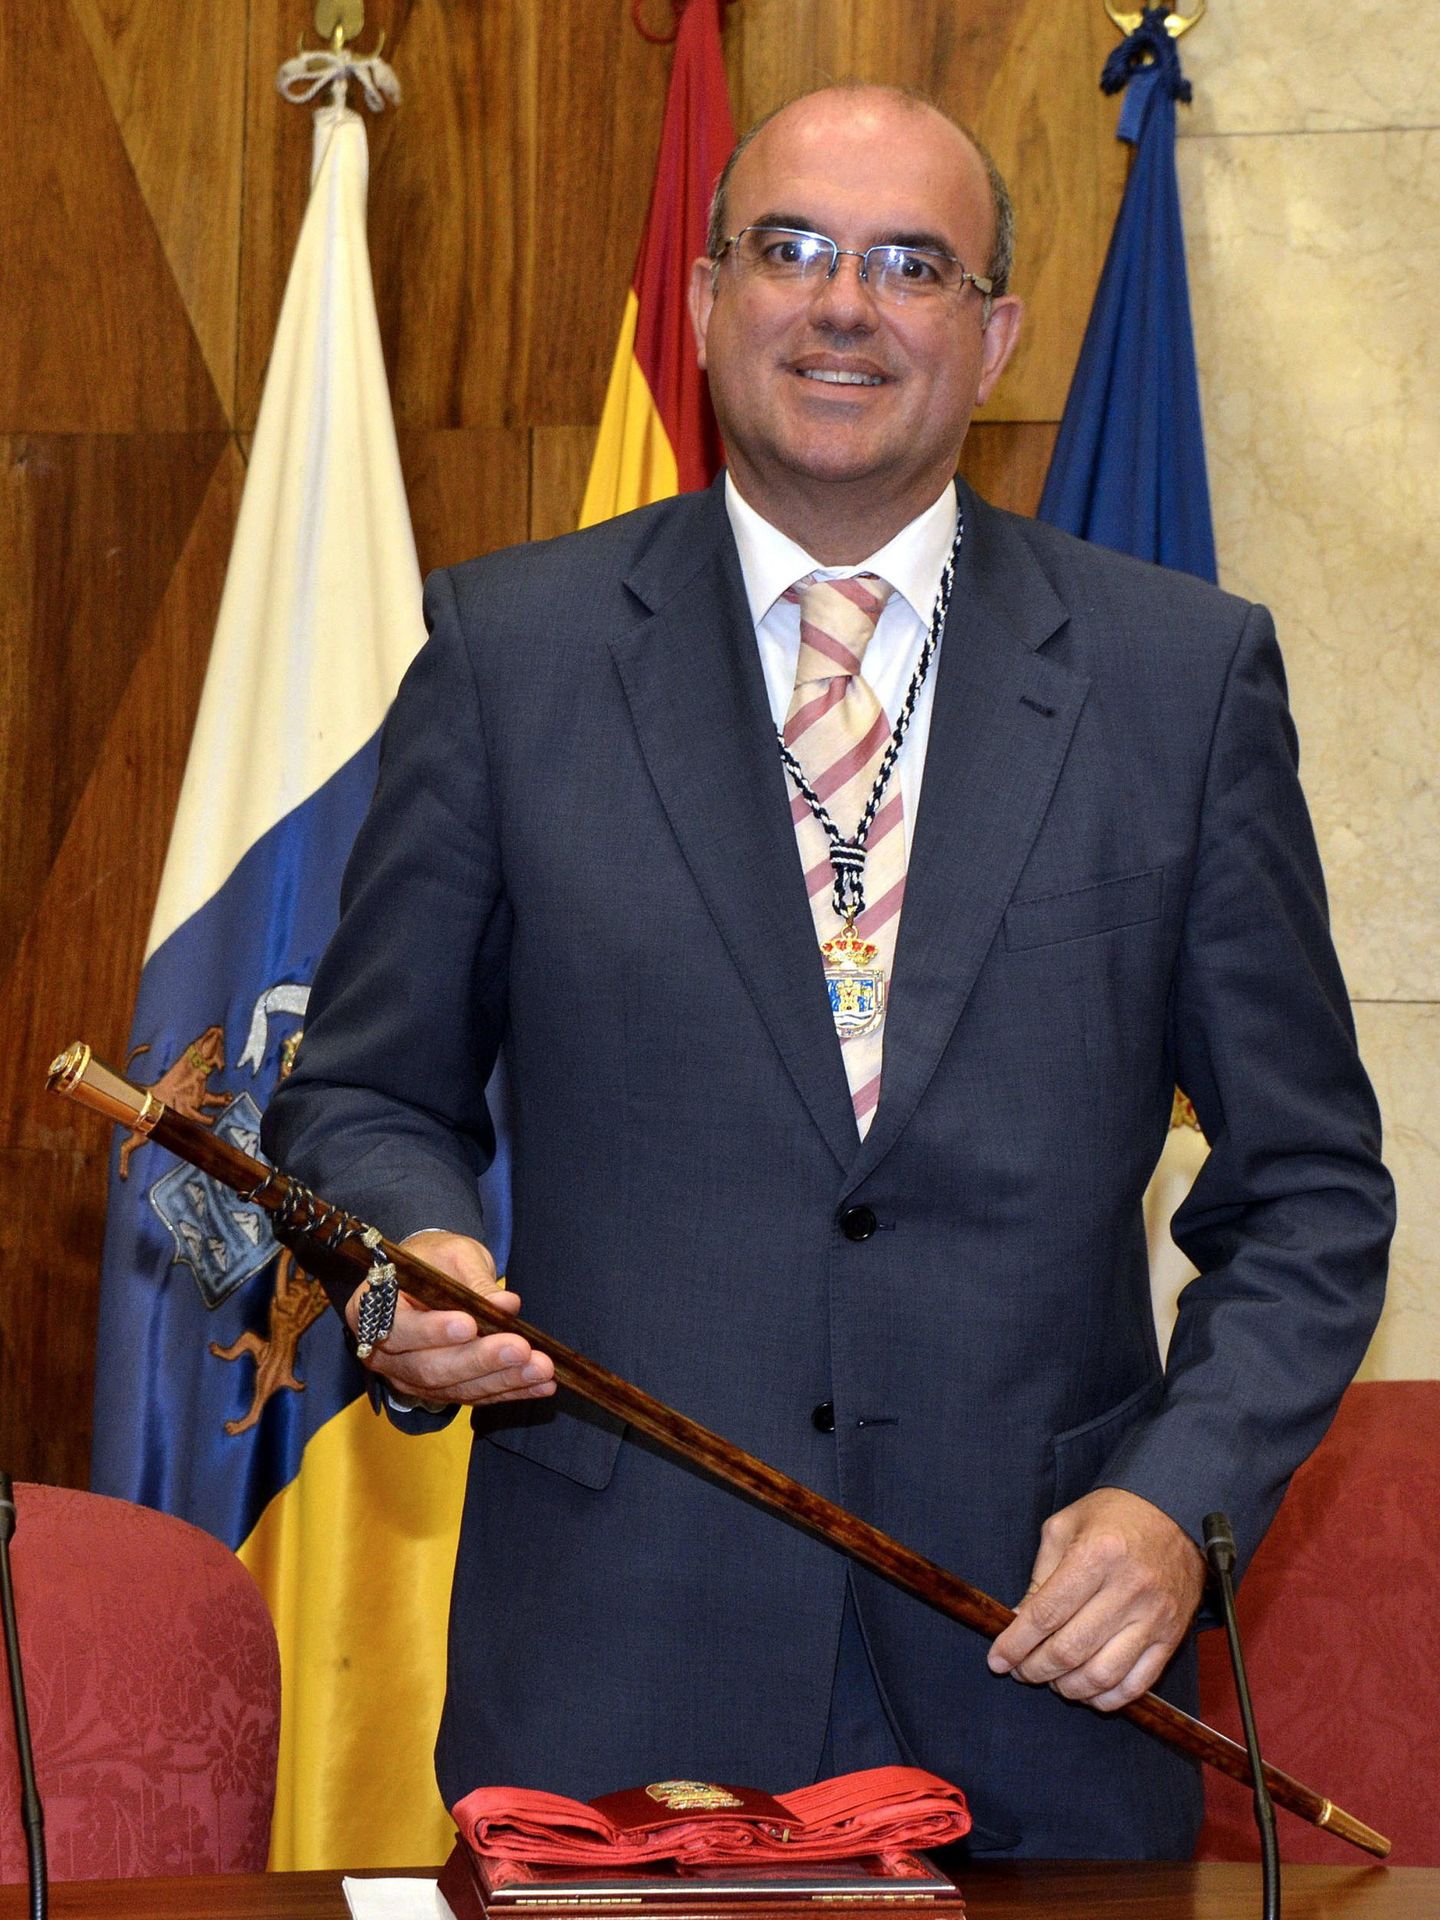 Anselmo Pestana toma posesión como presidente del Cabildo de La Palma, en junio de 2015. (EFE)